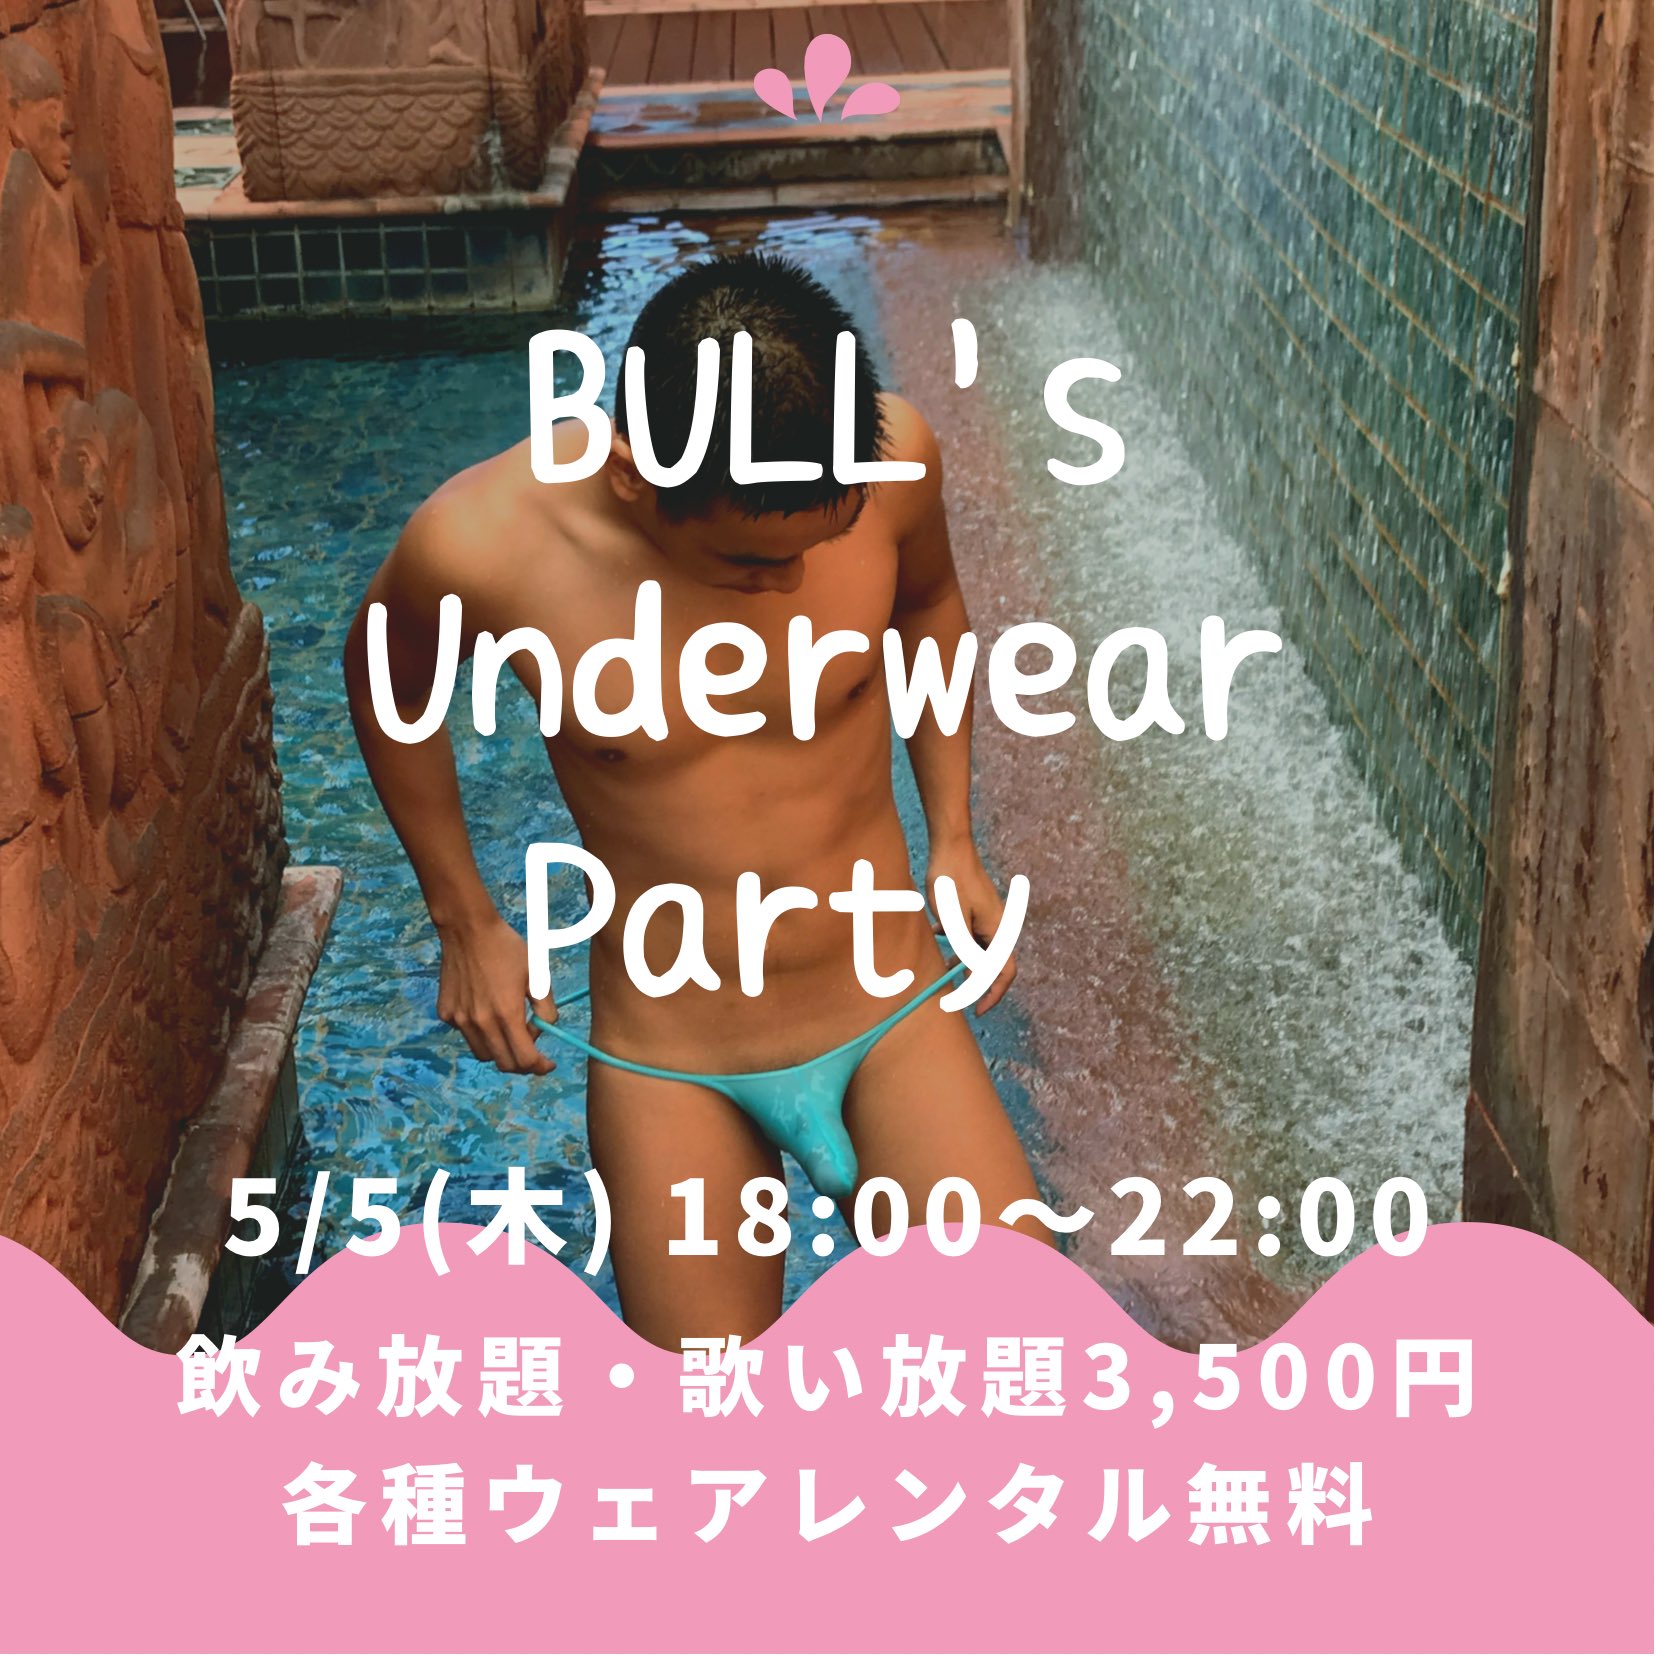 BULL’S Underwear Party